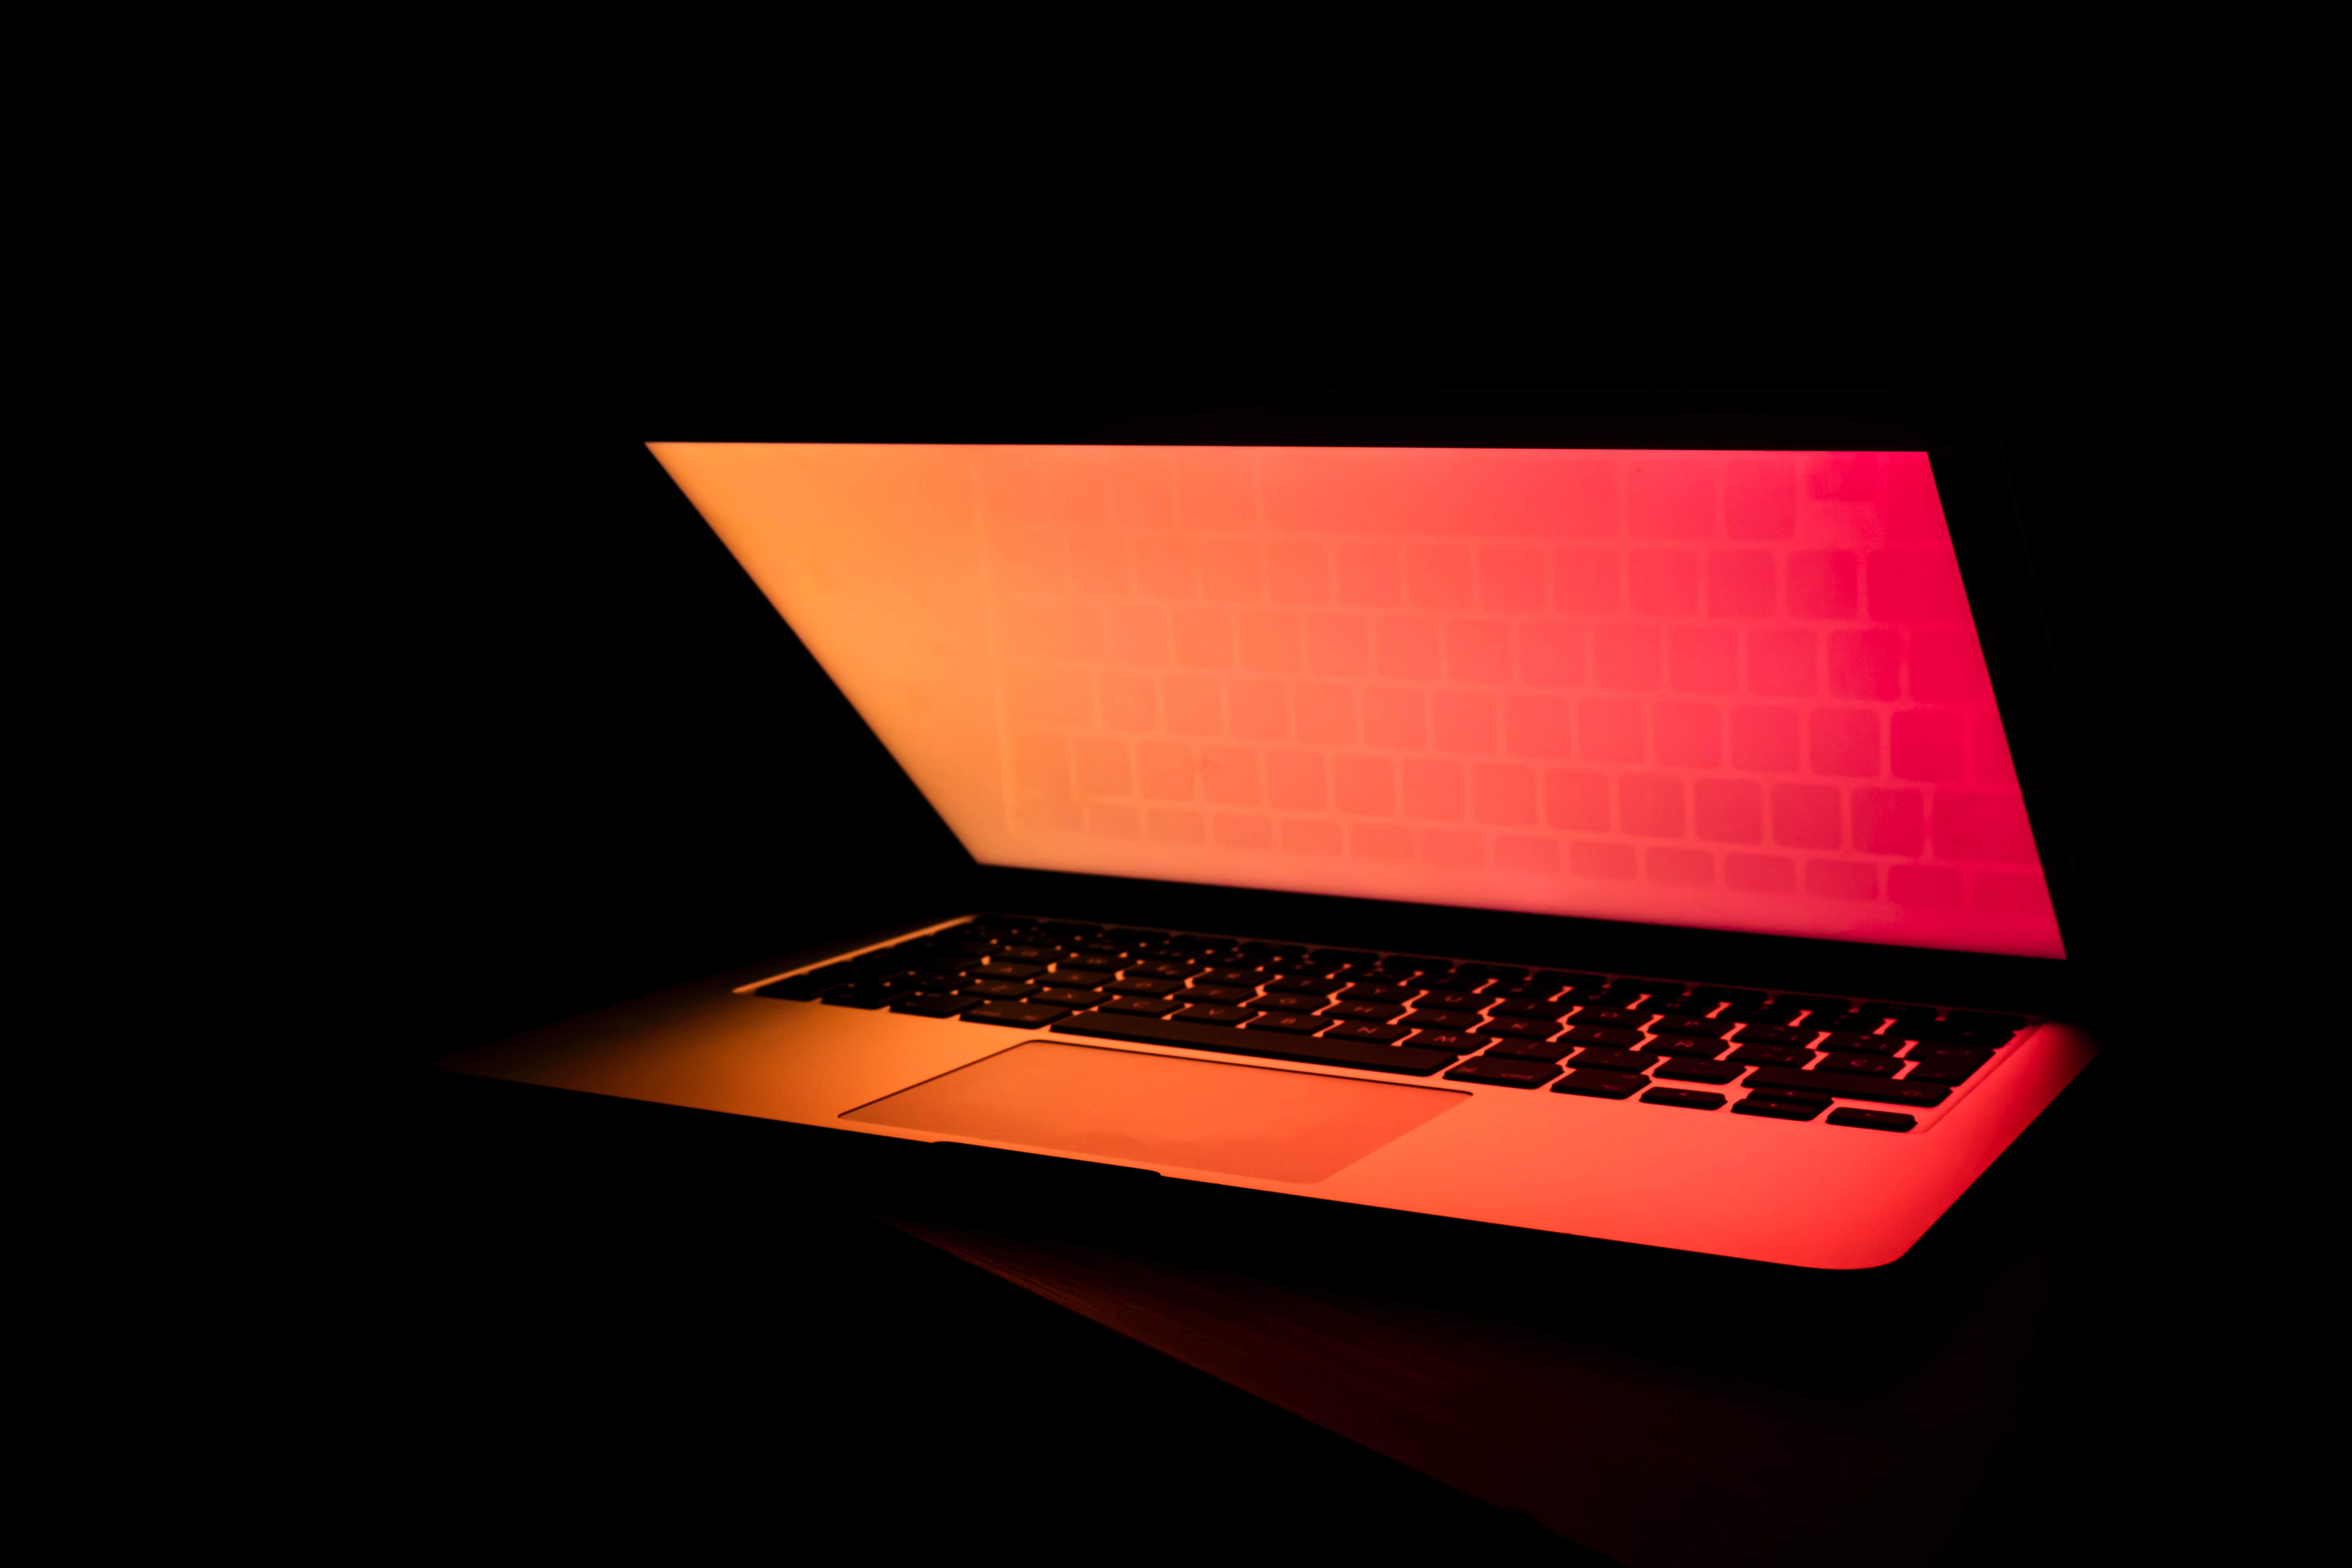 A glowing laptop